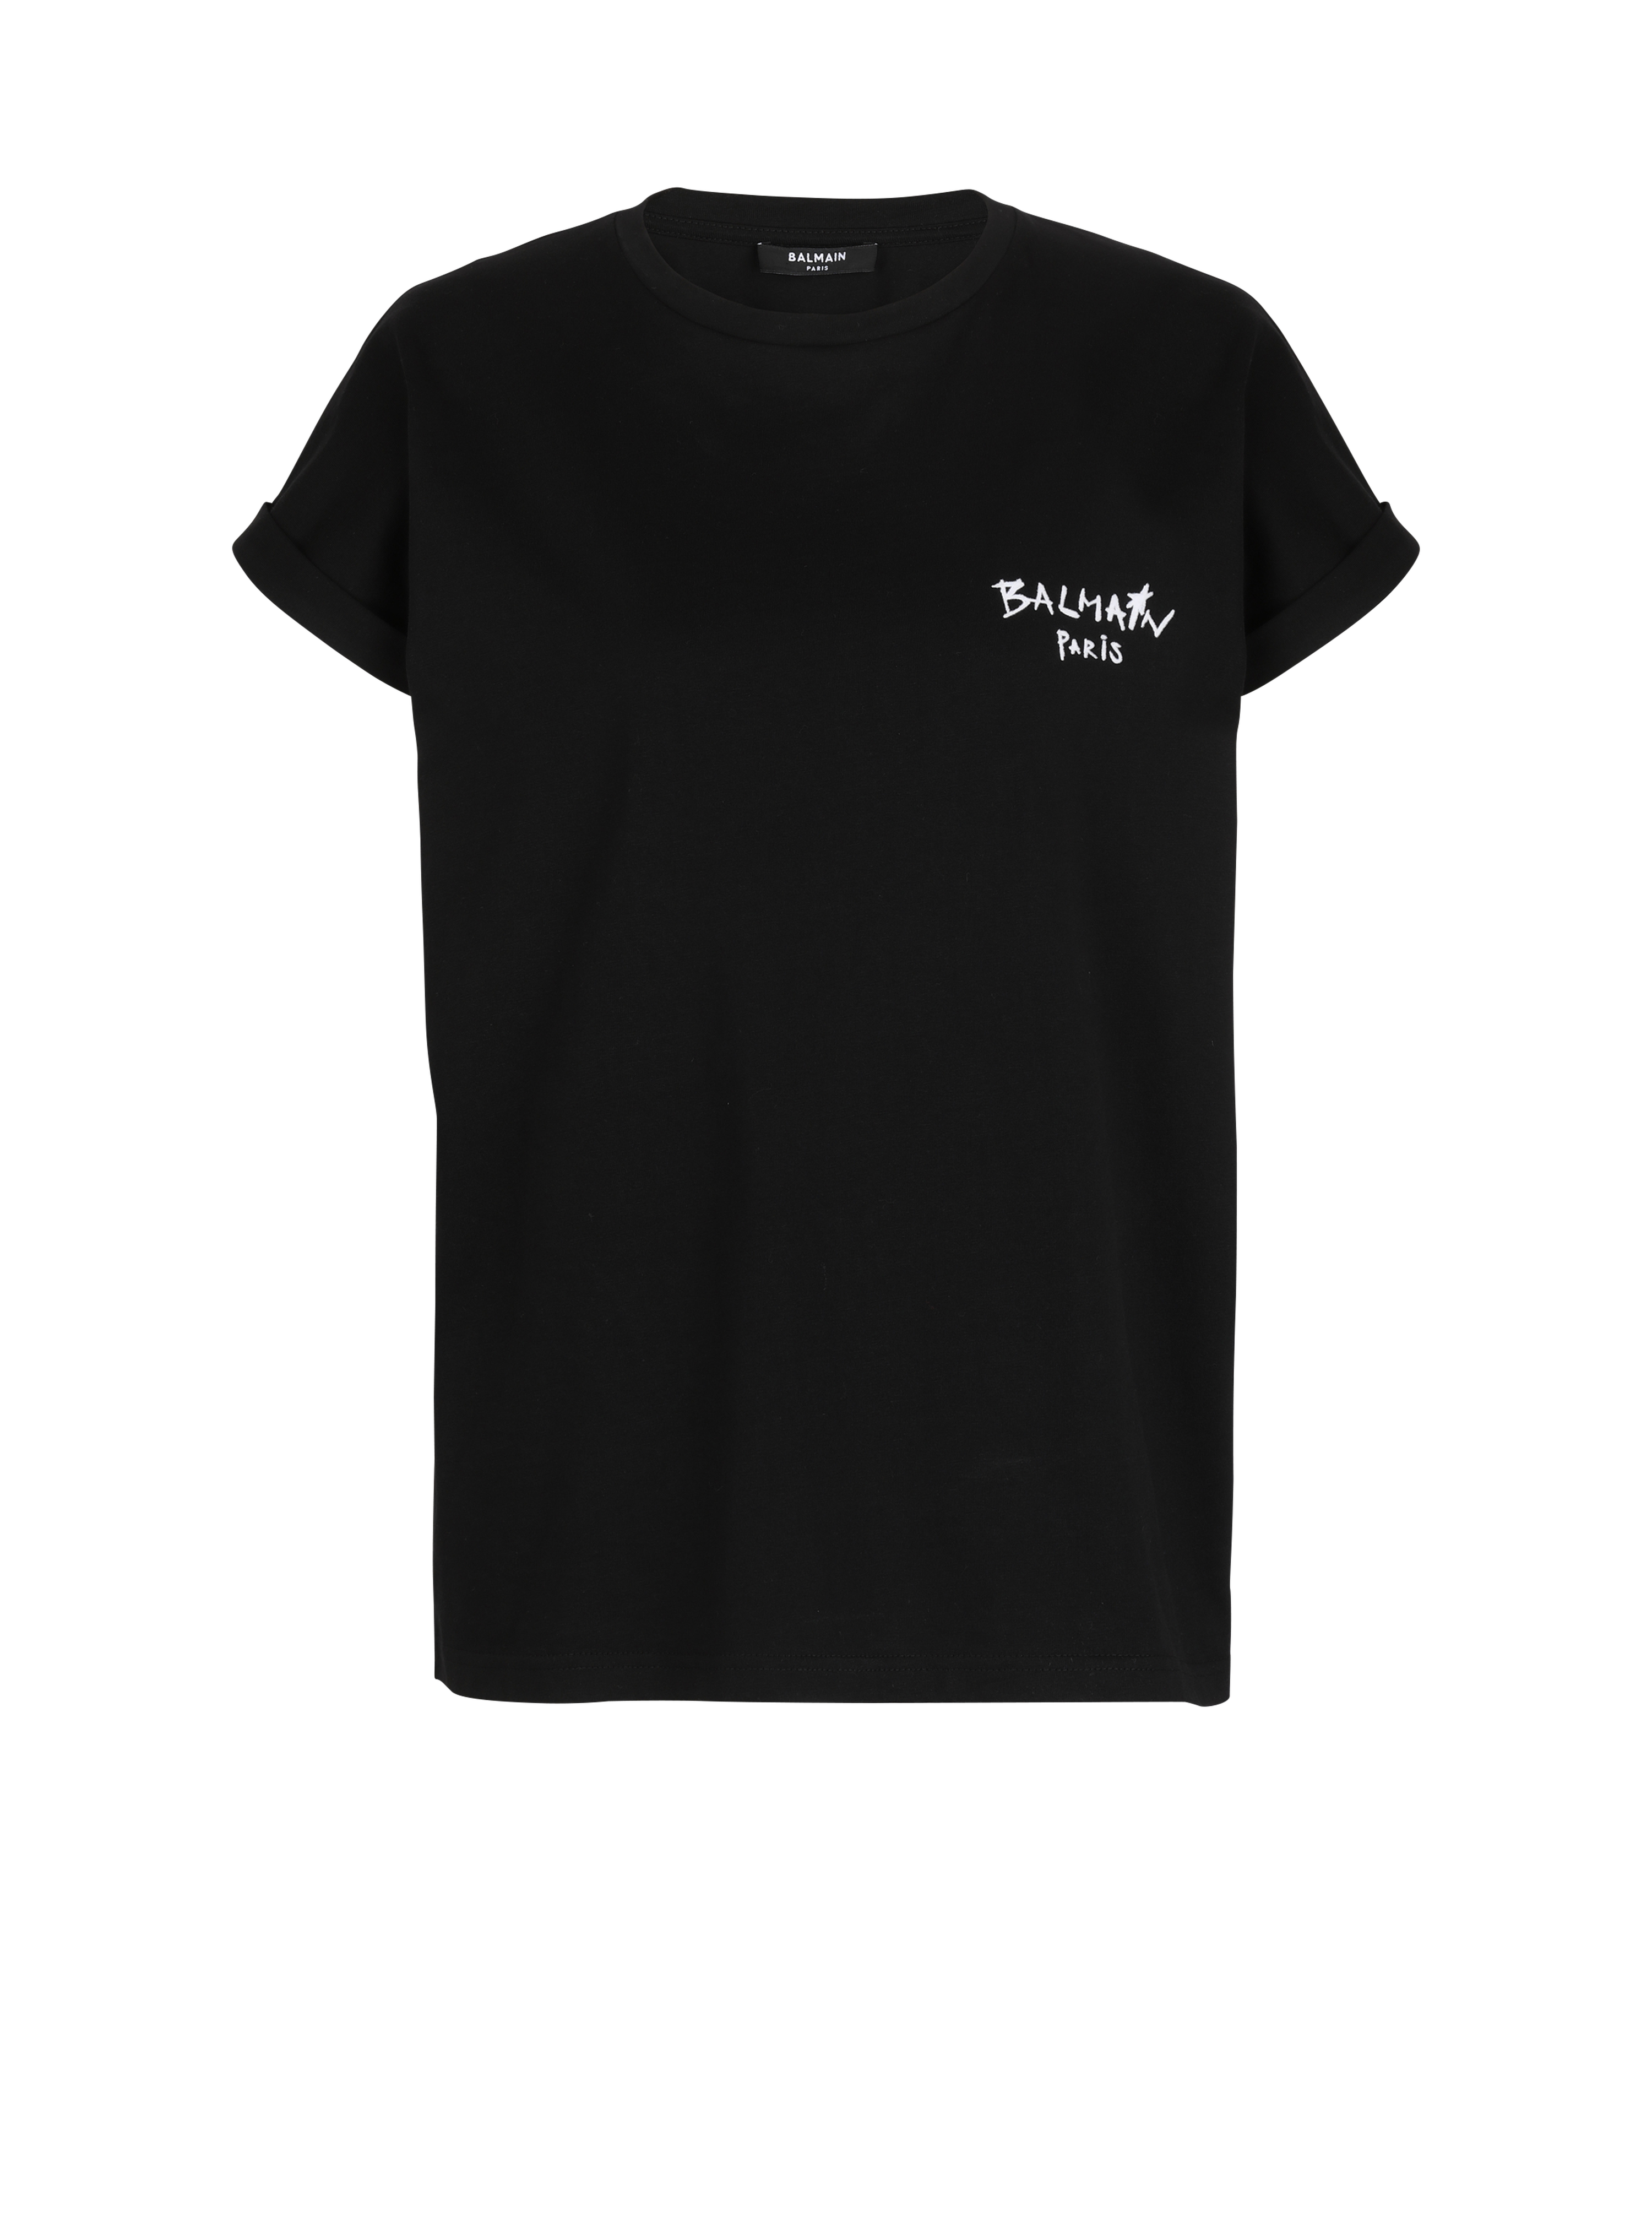 T-shirt en coton floqué petit logo graffiti Balmain, noir